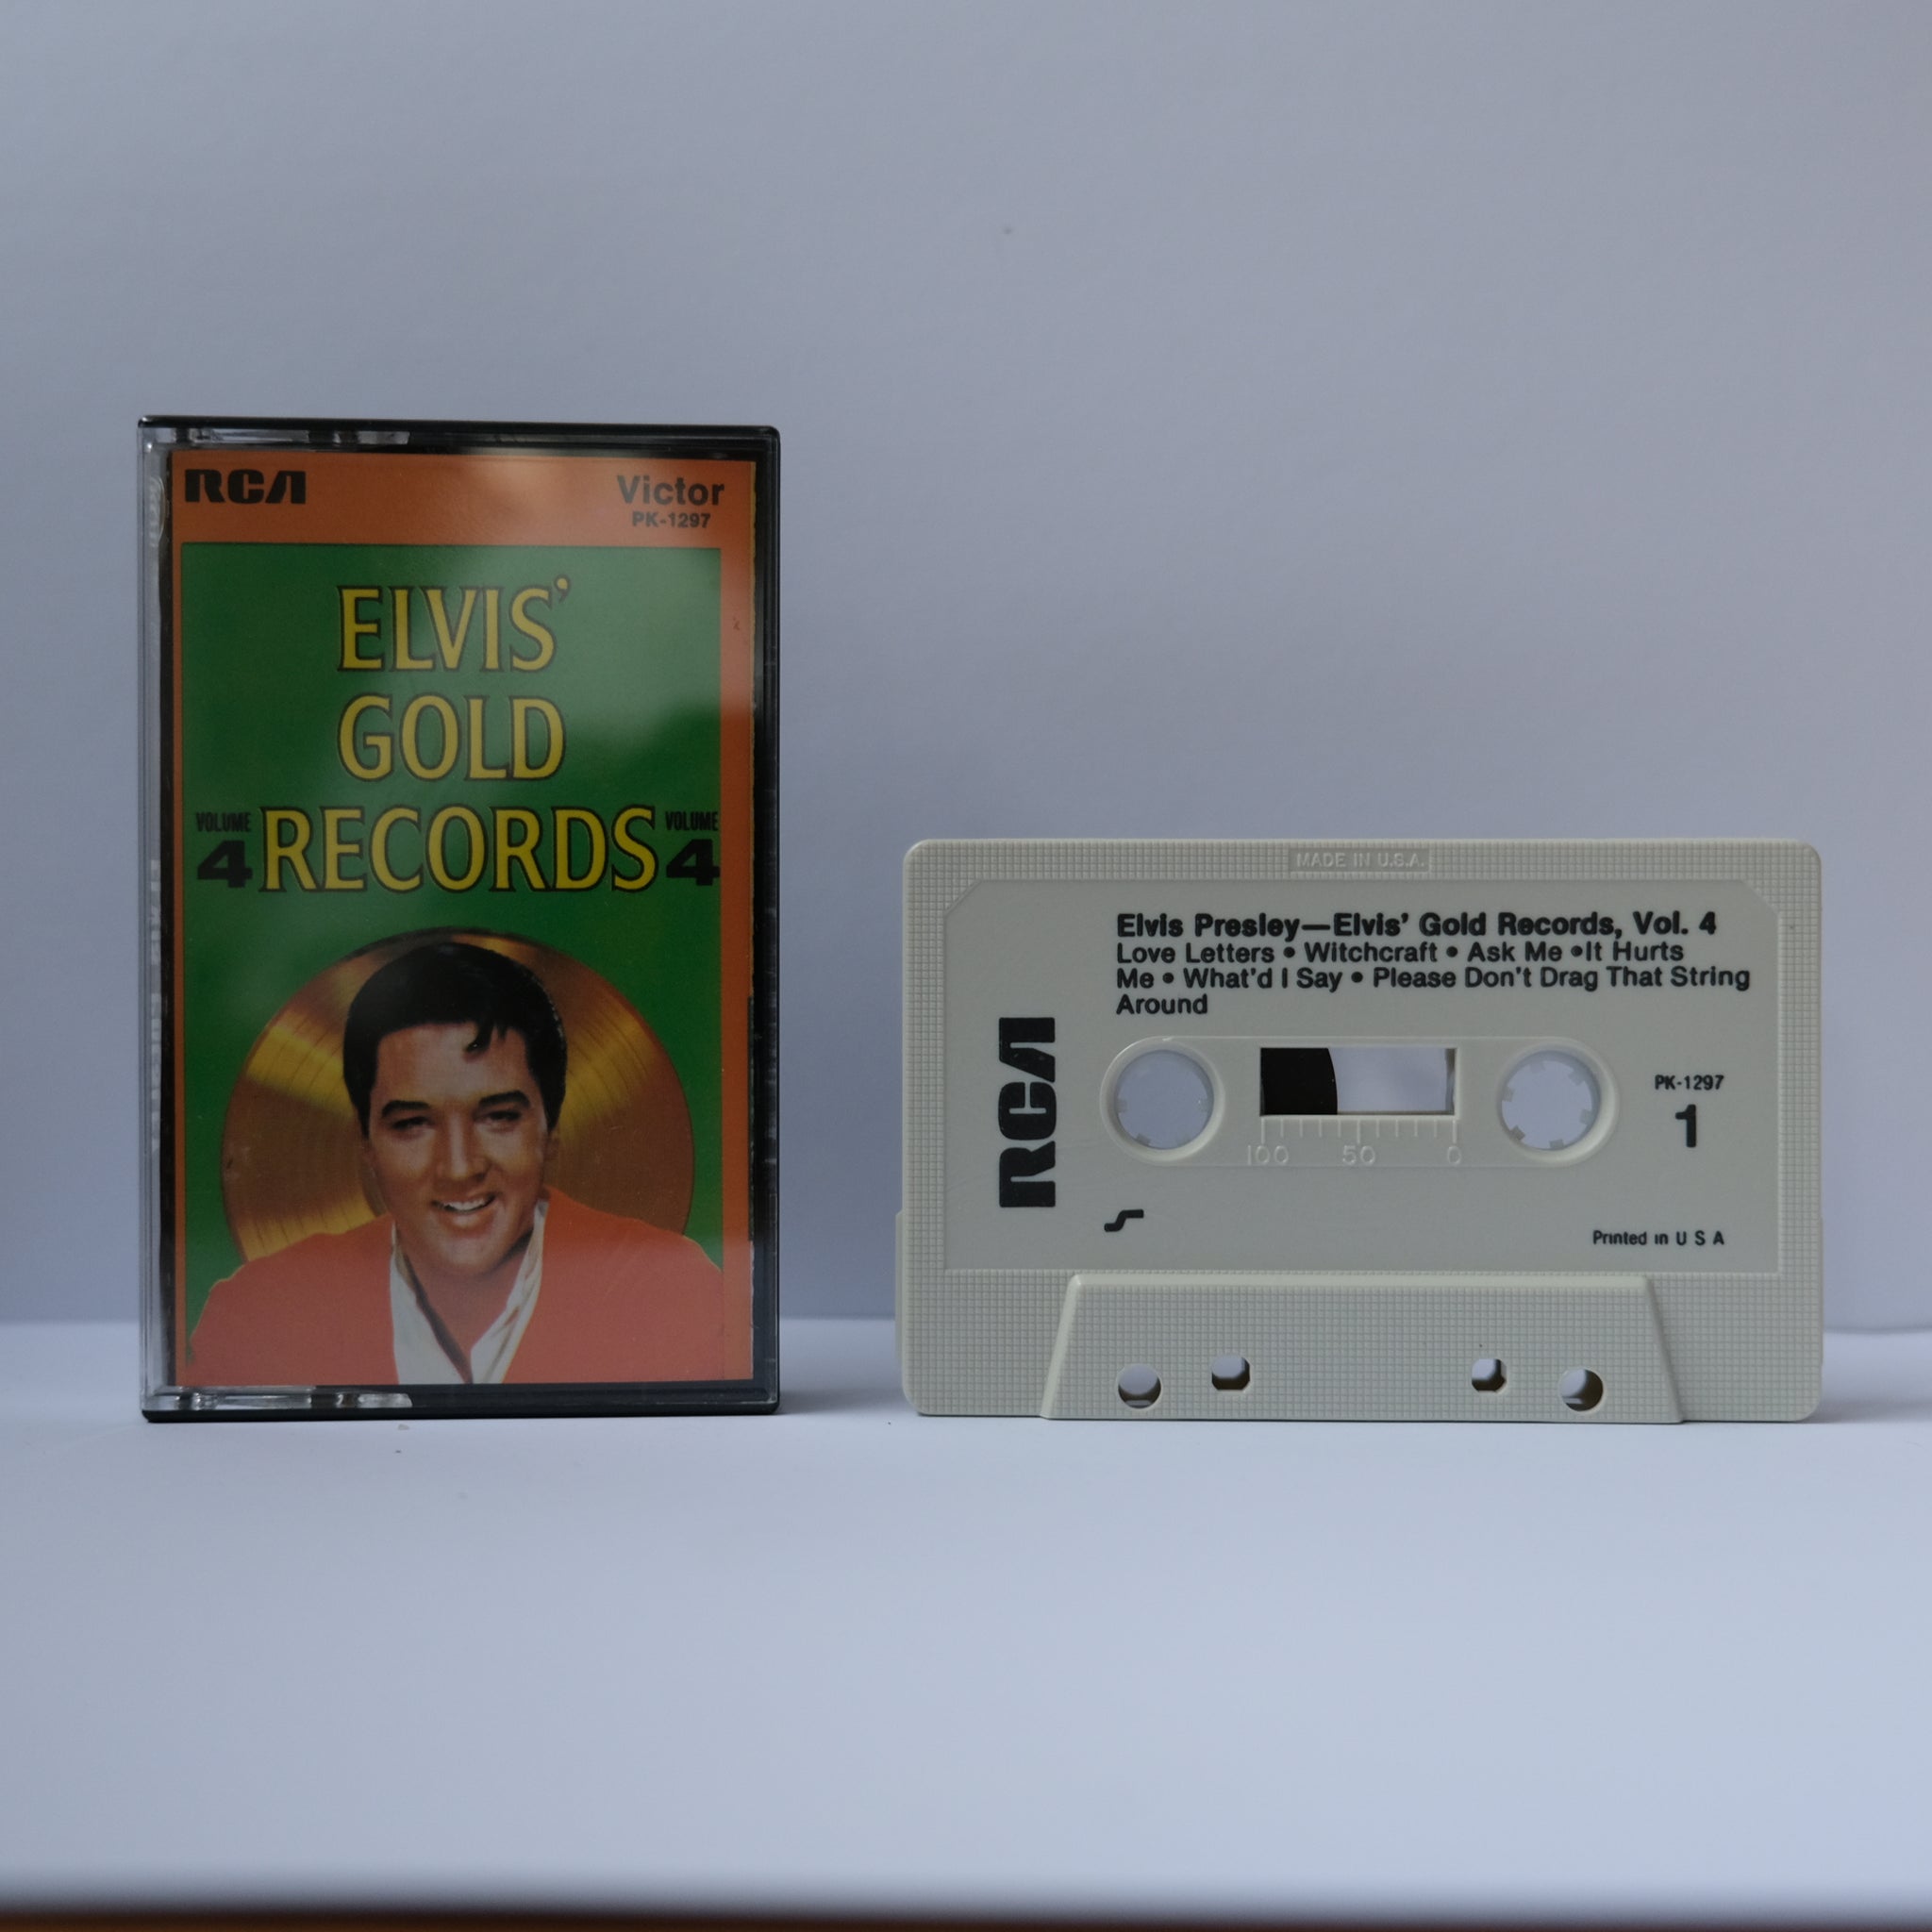 Elvis Presley - Elvis' Golden Records, Vol. 4